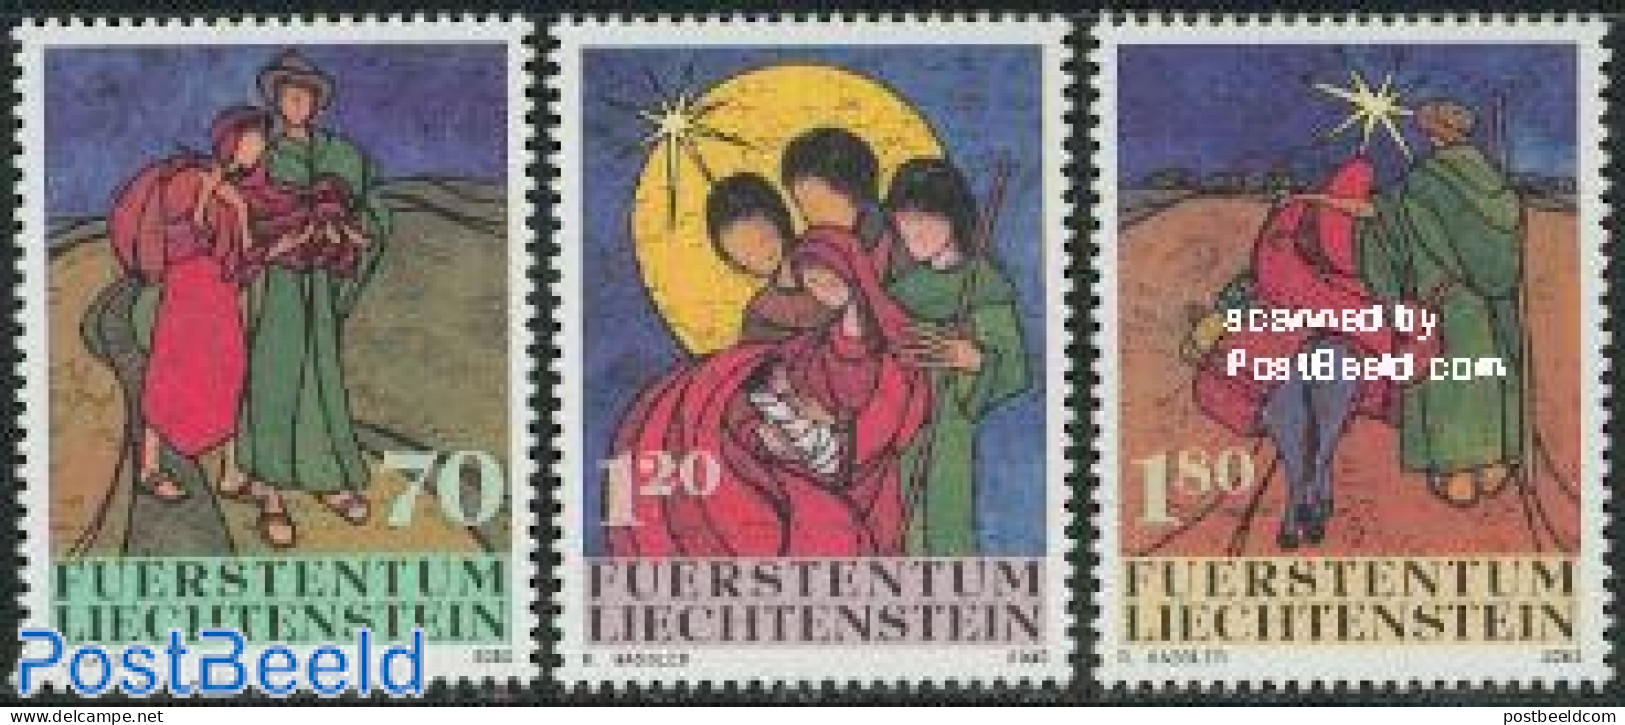 Liechtenstein 2002 Christmas 3v, Mint NH, Religion - Christmas - Unused Stamps